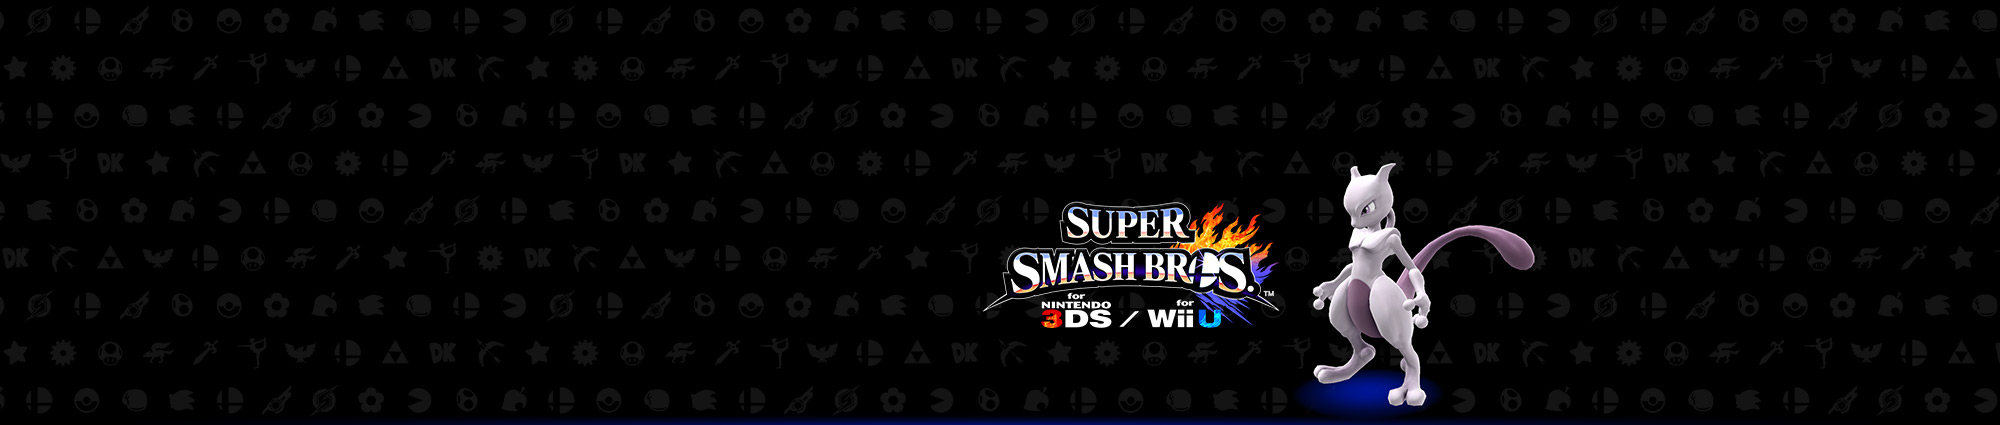 Super Smash Bros. Club Nintendo Promotion